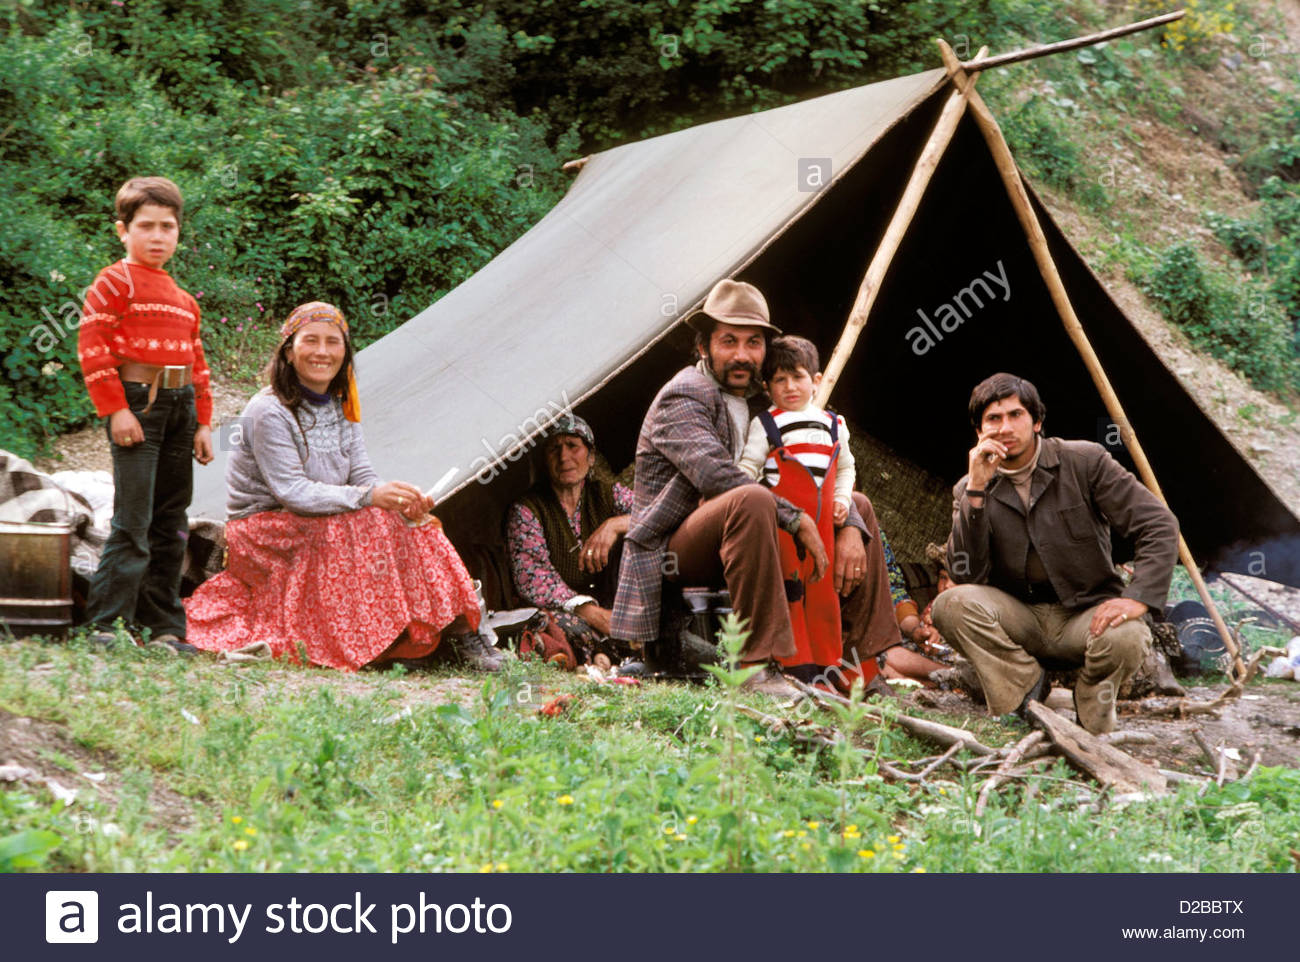 yugoslavia-gypsy-family-in-front-of-tent-D2BBTX.jpg